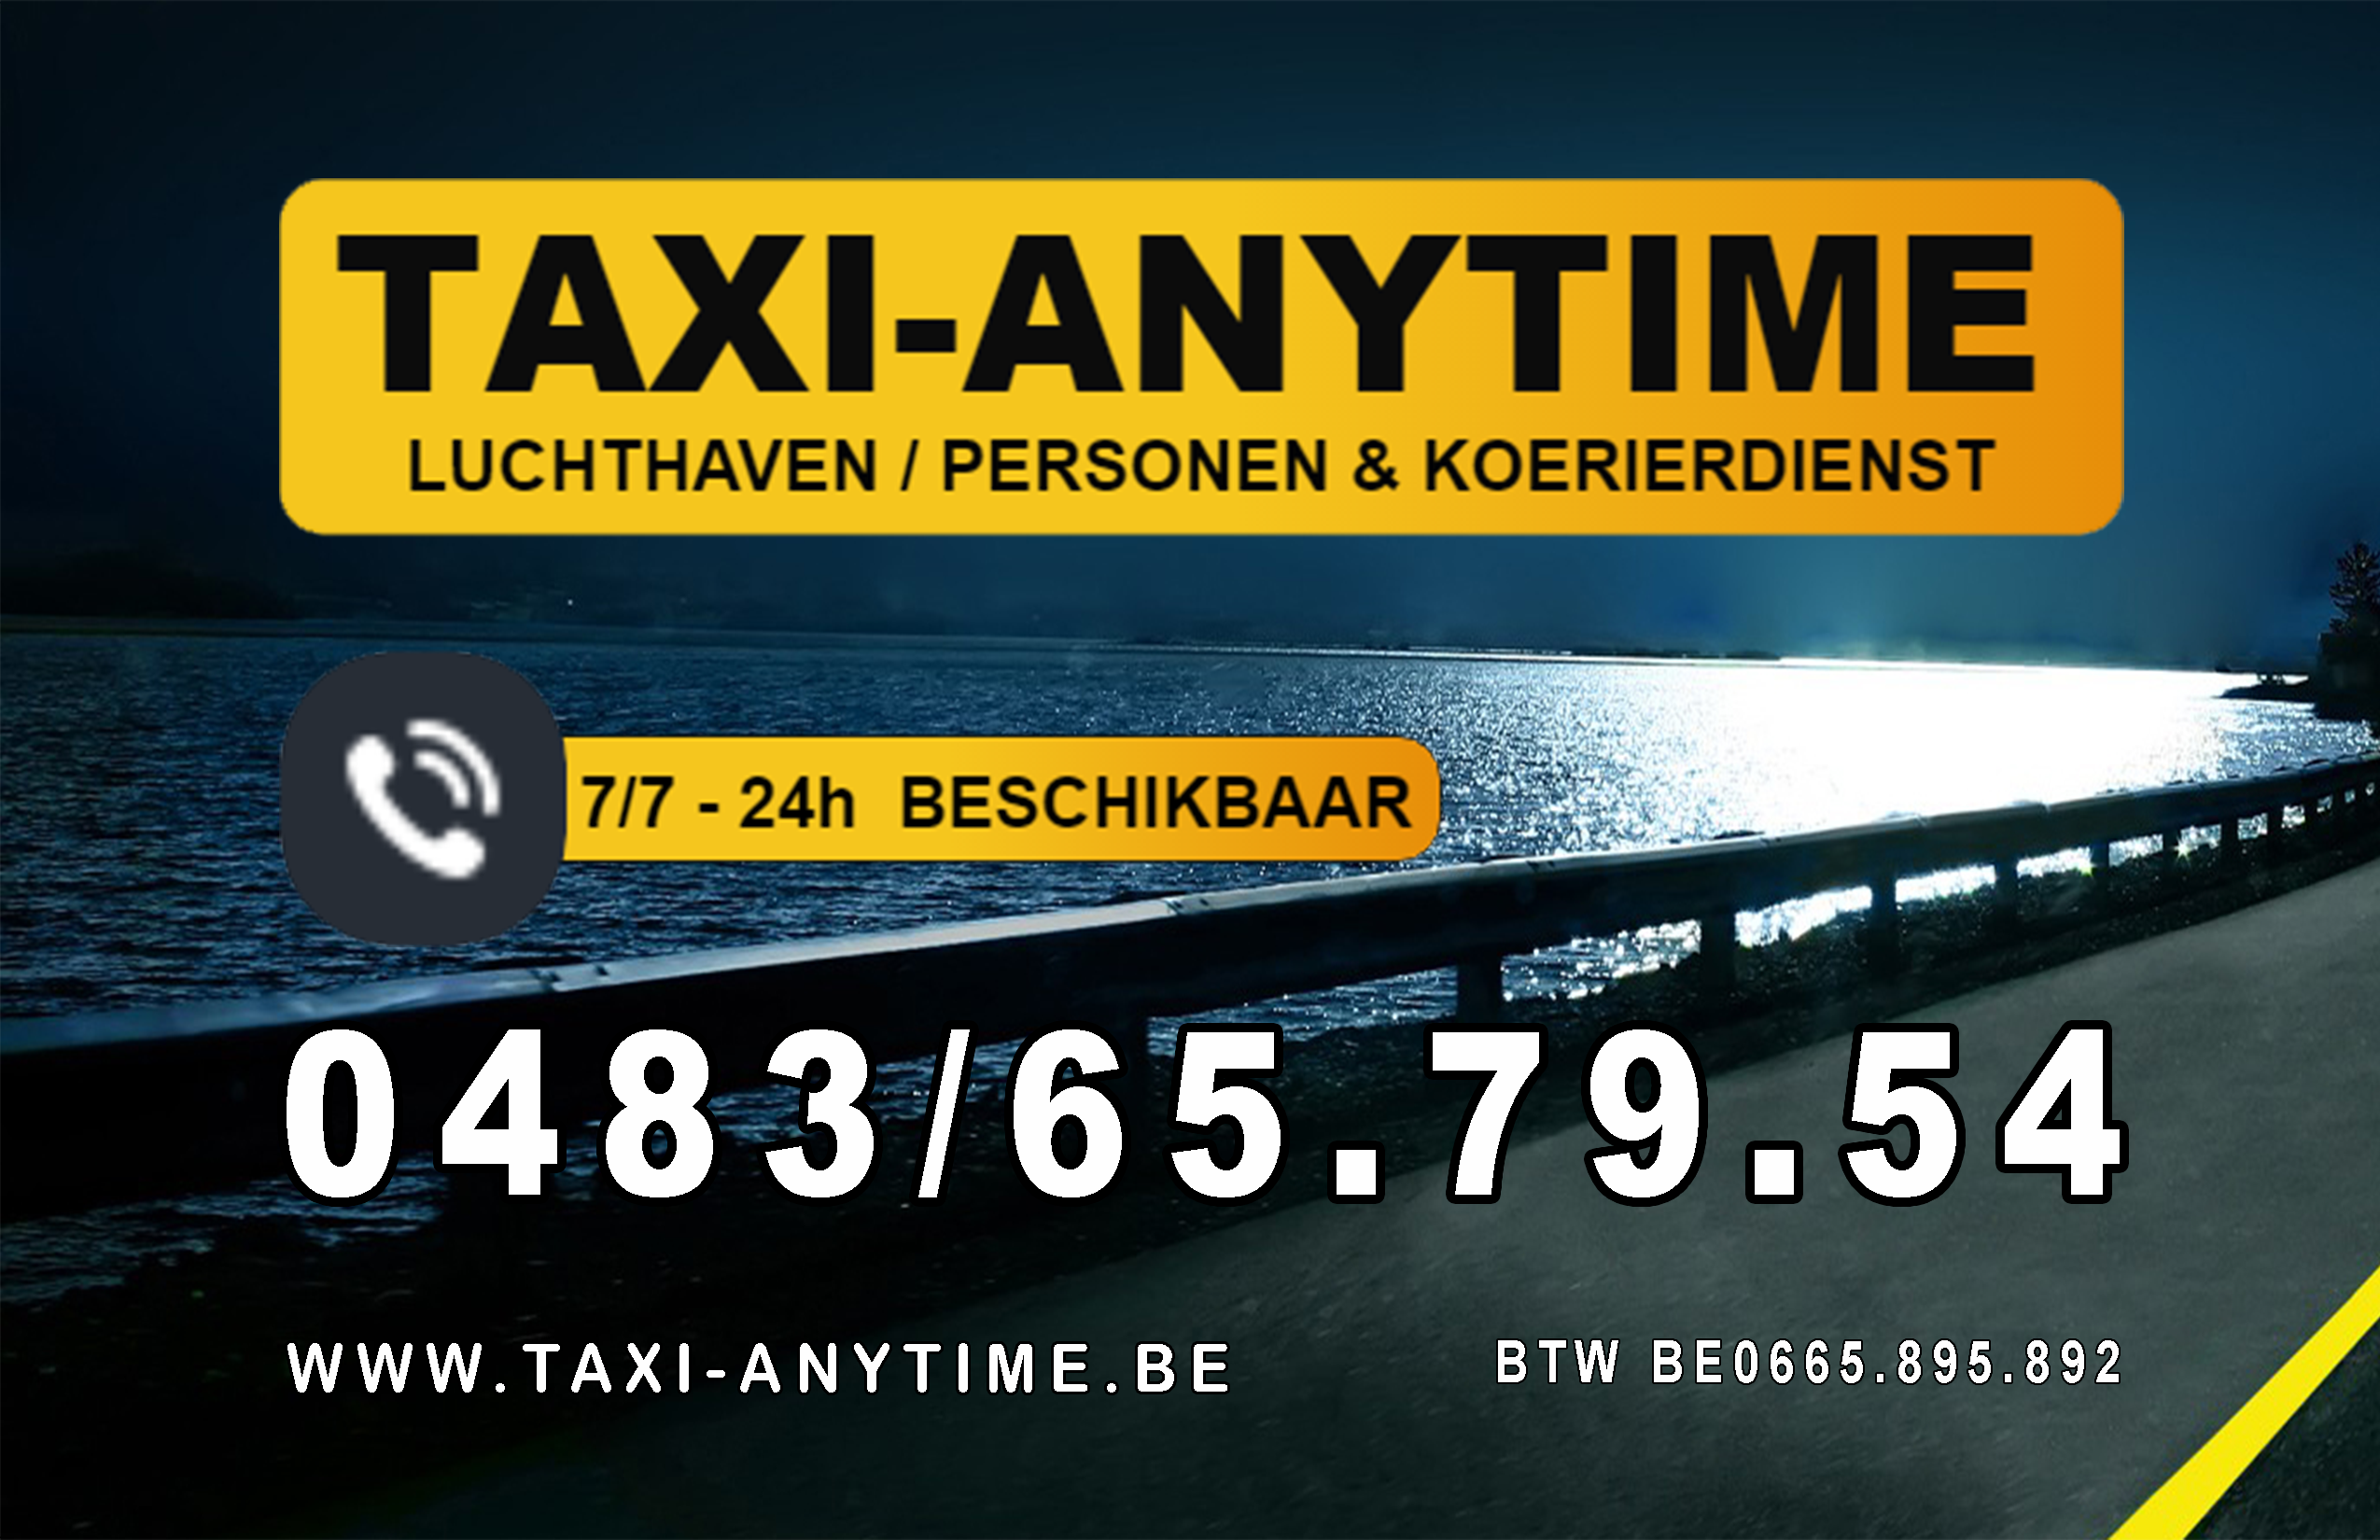 taxibedrijven met luchthavenvervoer Wielsbeke Taxi-anytime